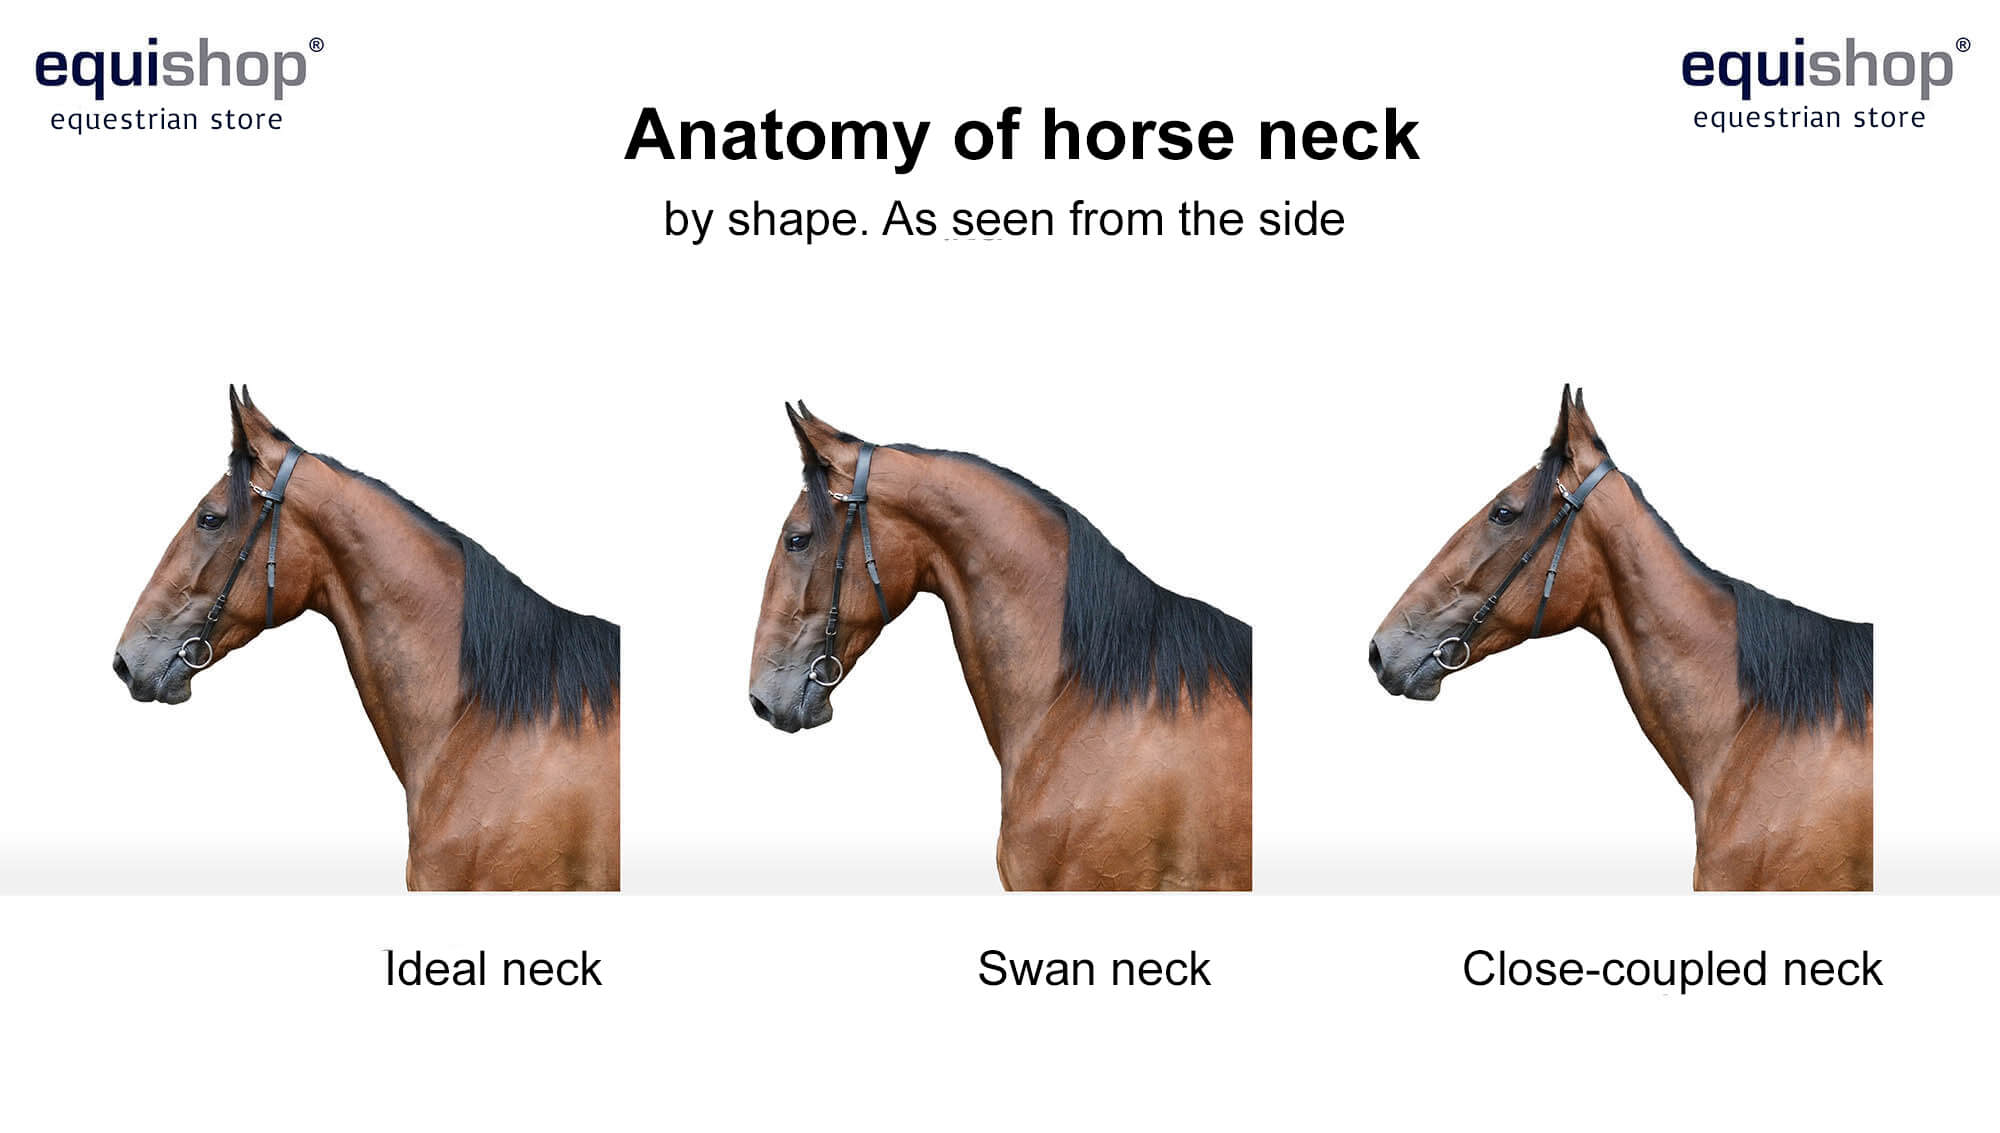 horse parts diagram